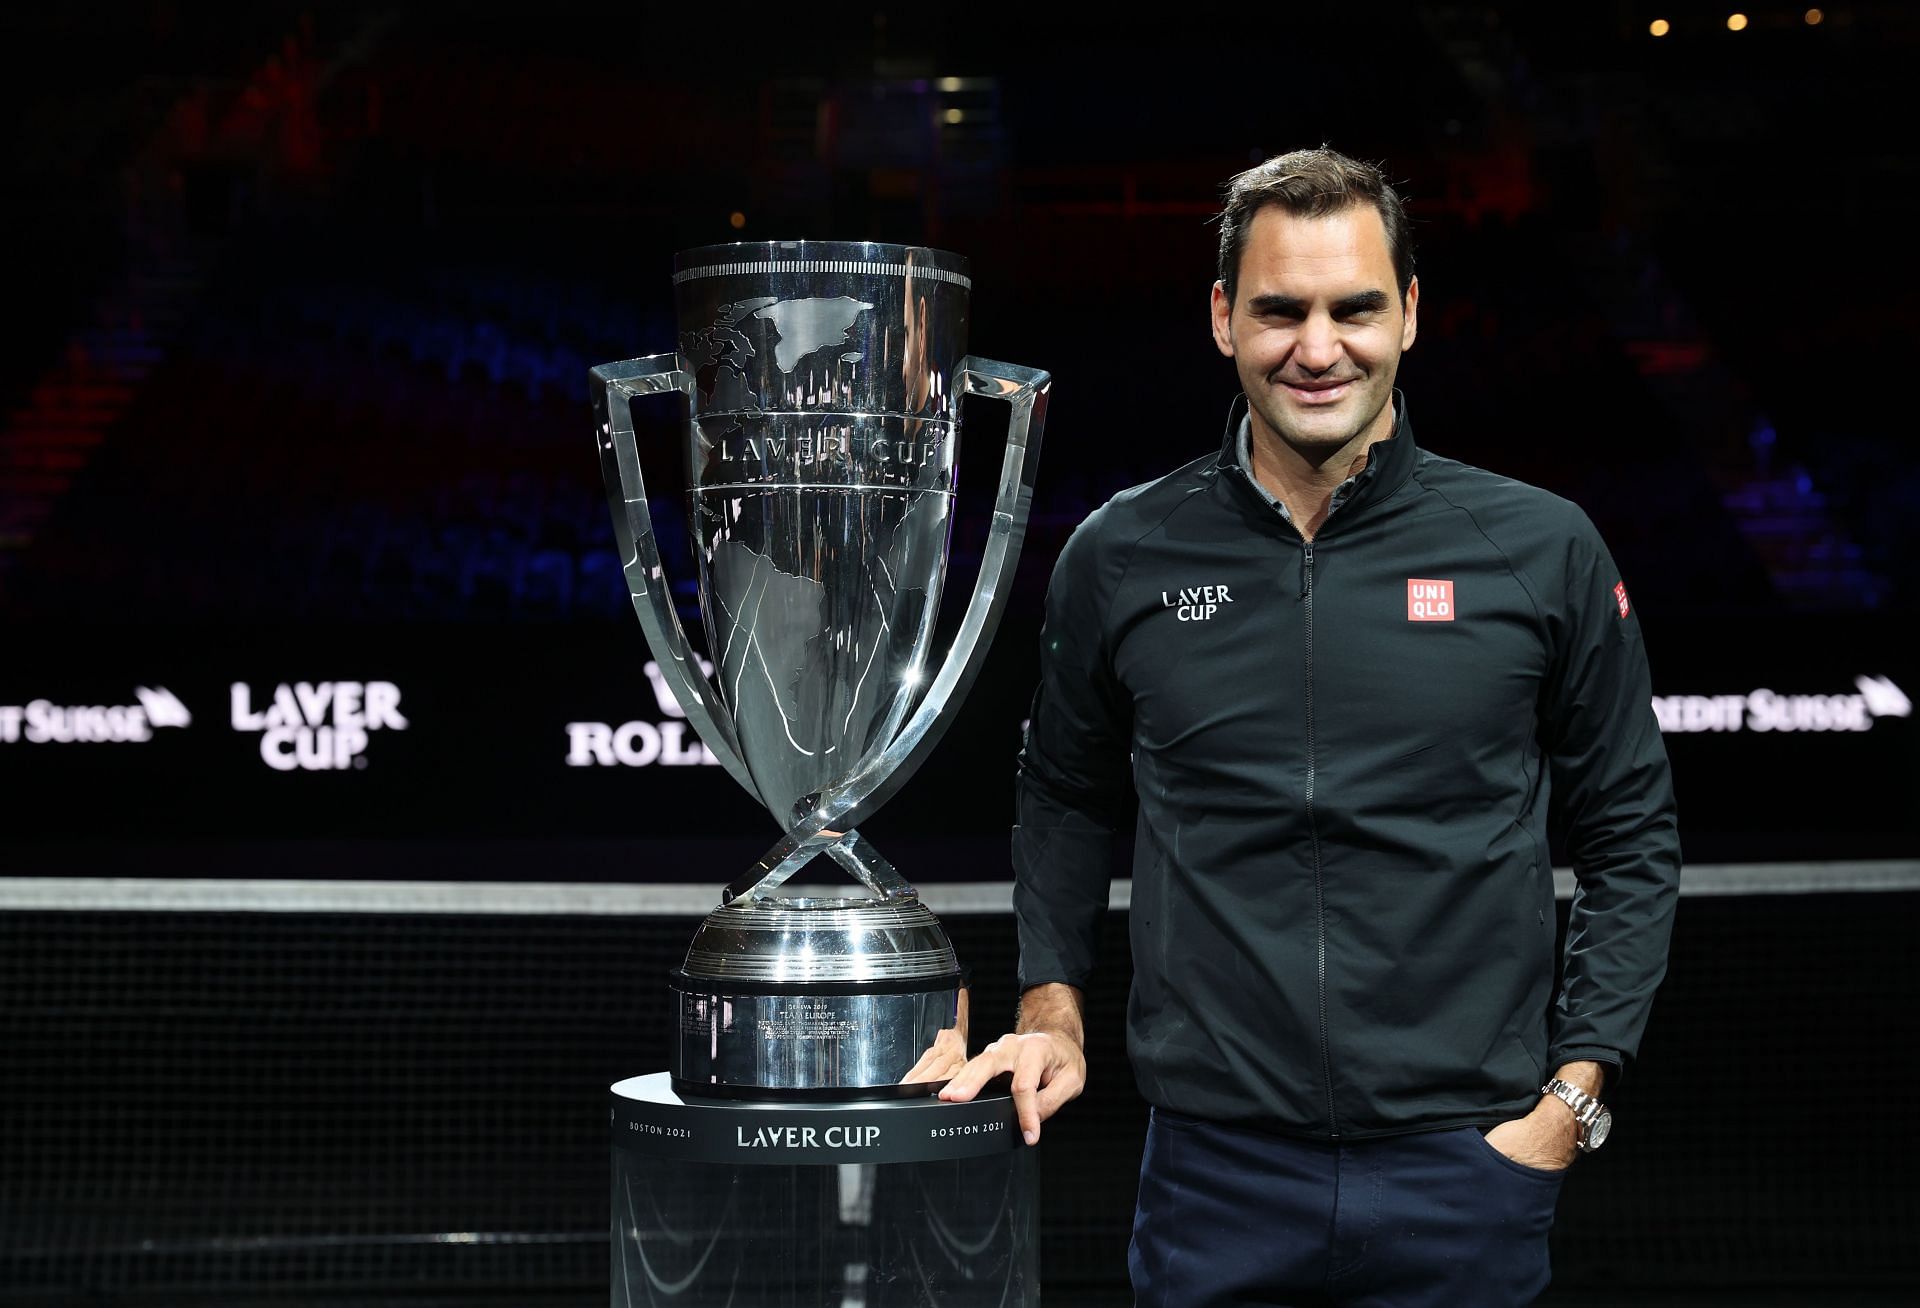 Roger Federer at the Laver Cup 2021